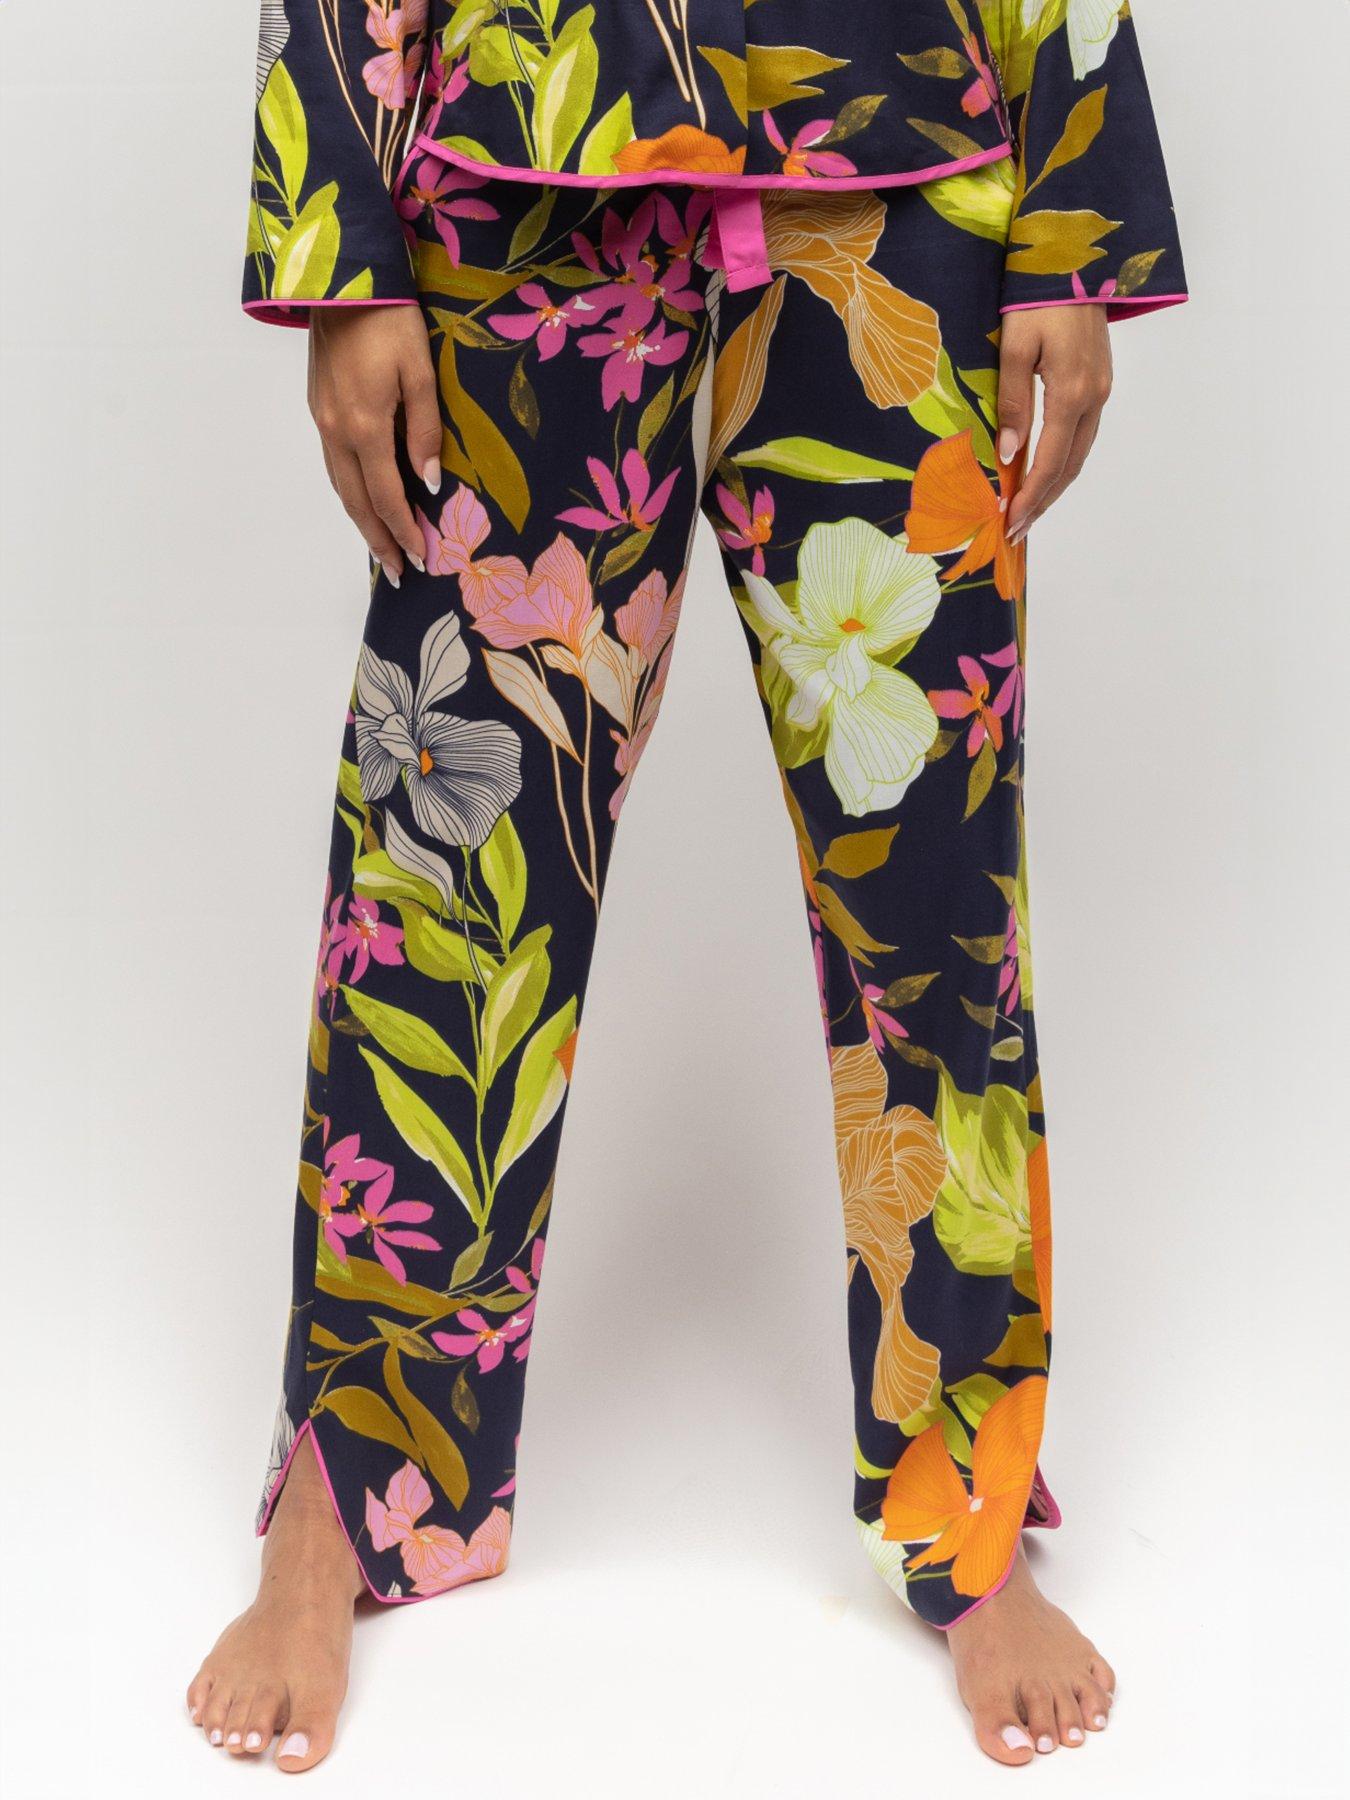 https://media.very.ie/i/littlewoodsireland/VOOLG_SQ1_0000000048_NAVY_MDf/cyberjammies-navy-floral-print-pyjama-bottoms.jpg?$180x240_retinamobilex2$